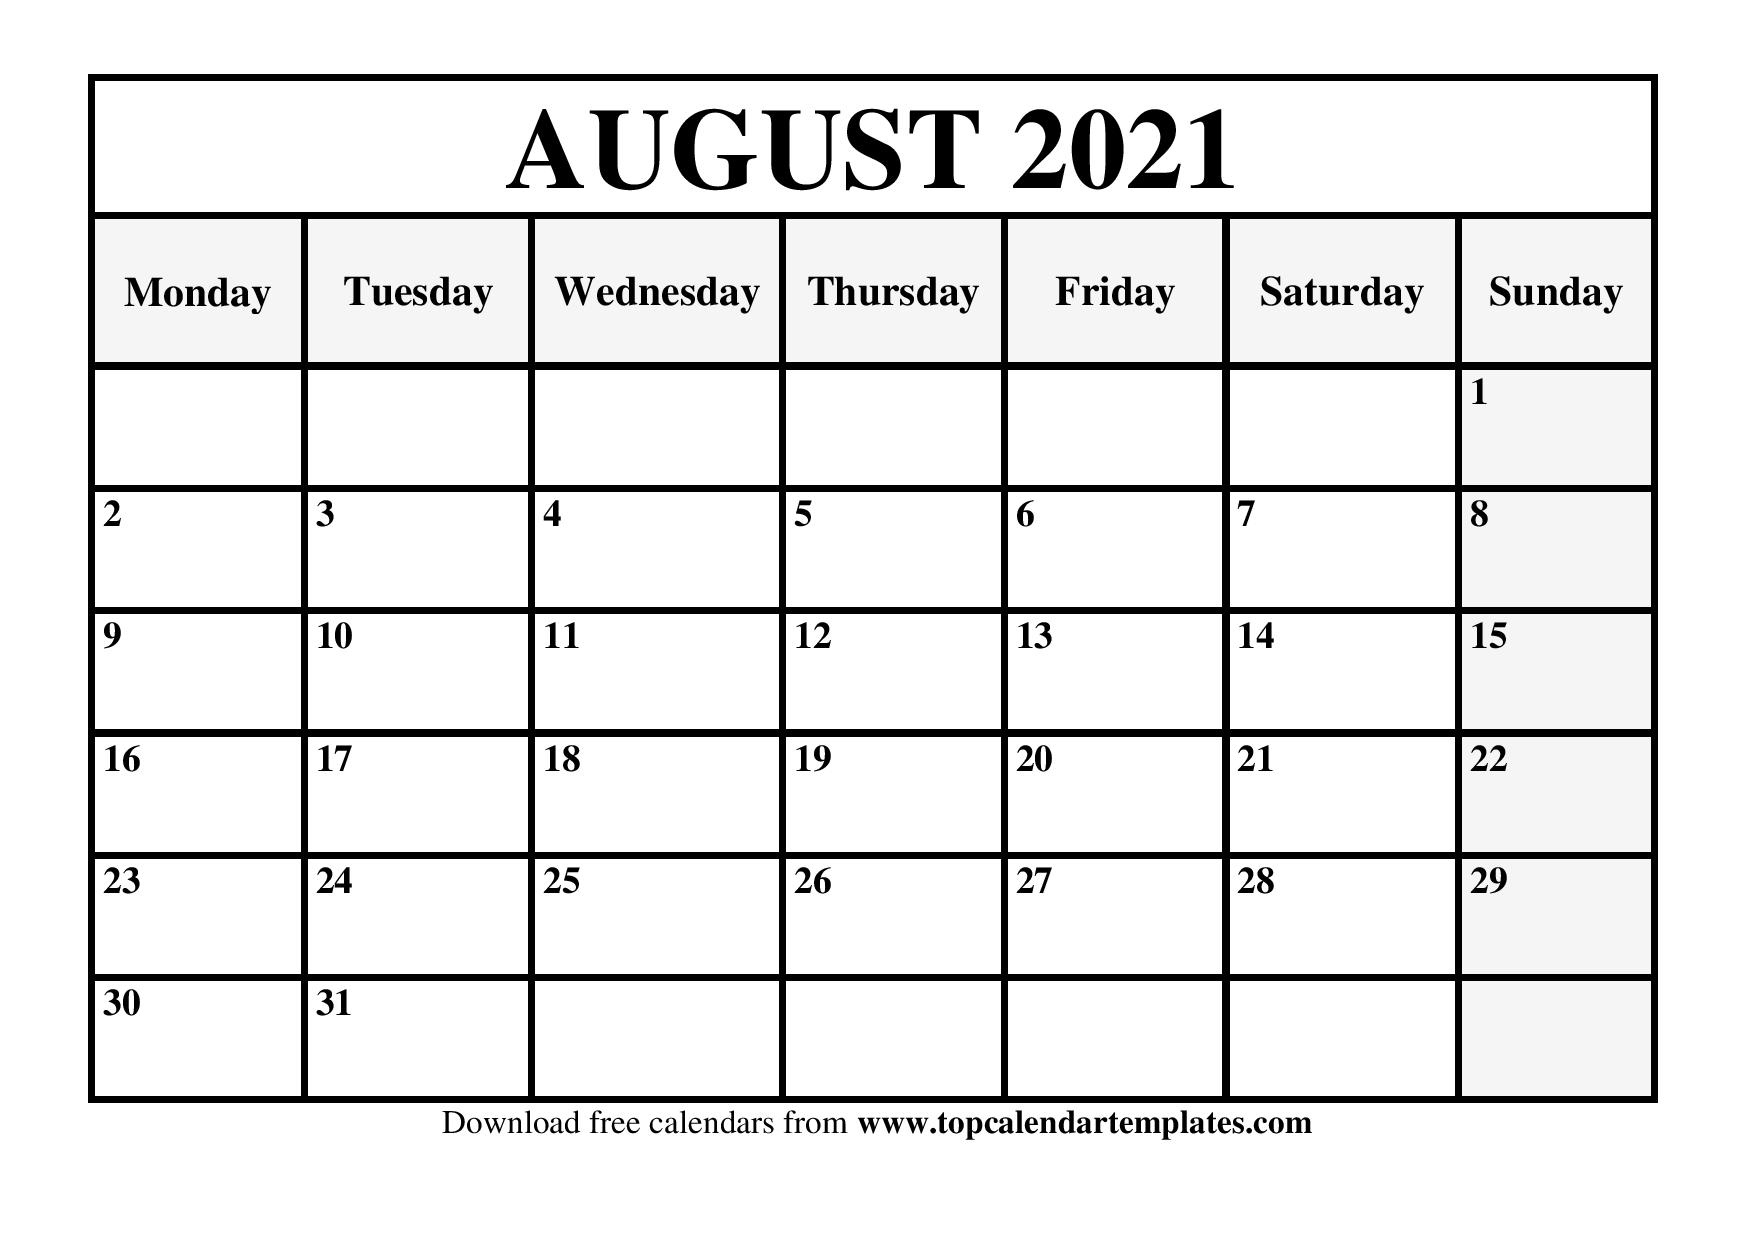 August 2021 Printable Calendar - Monthly Templates August 2020 To August 2021 Calendar